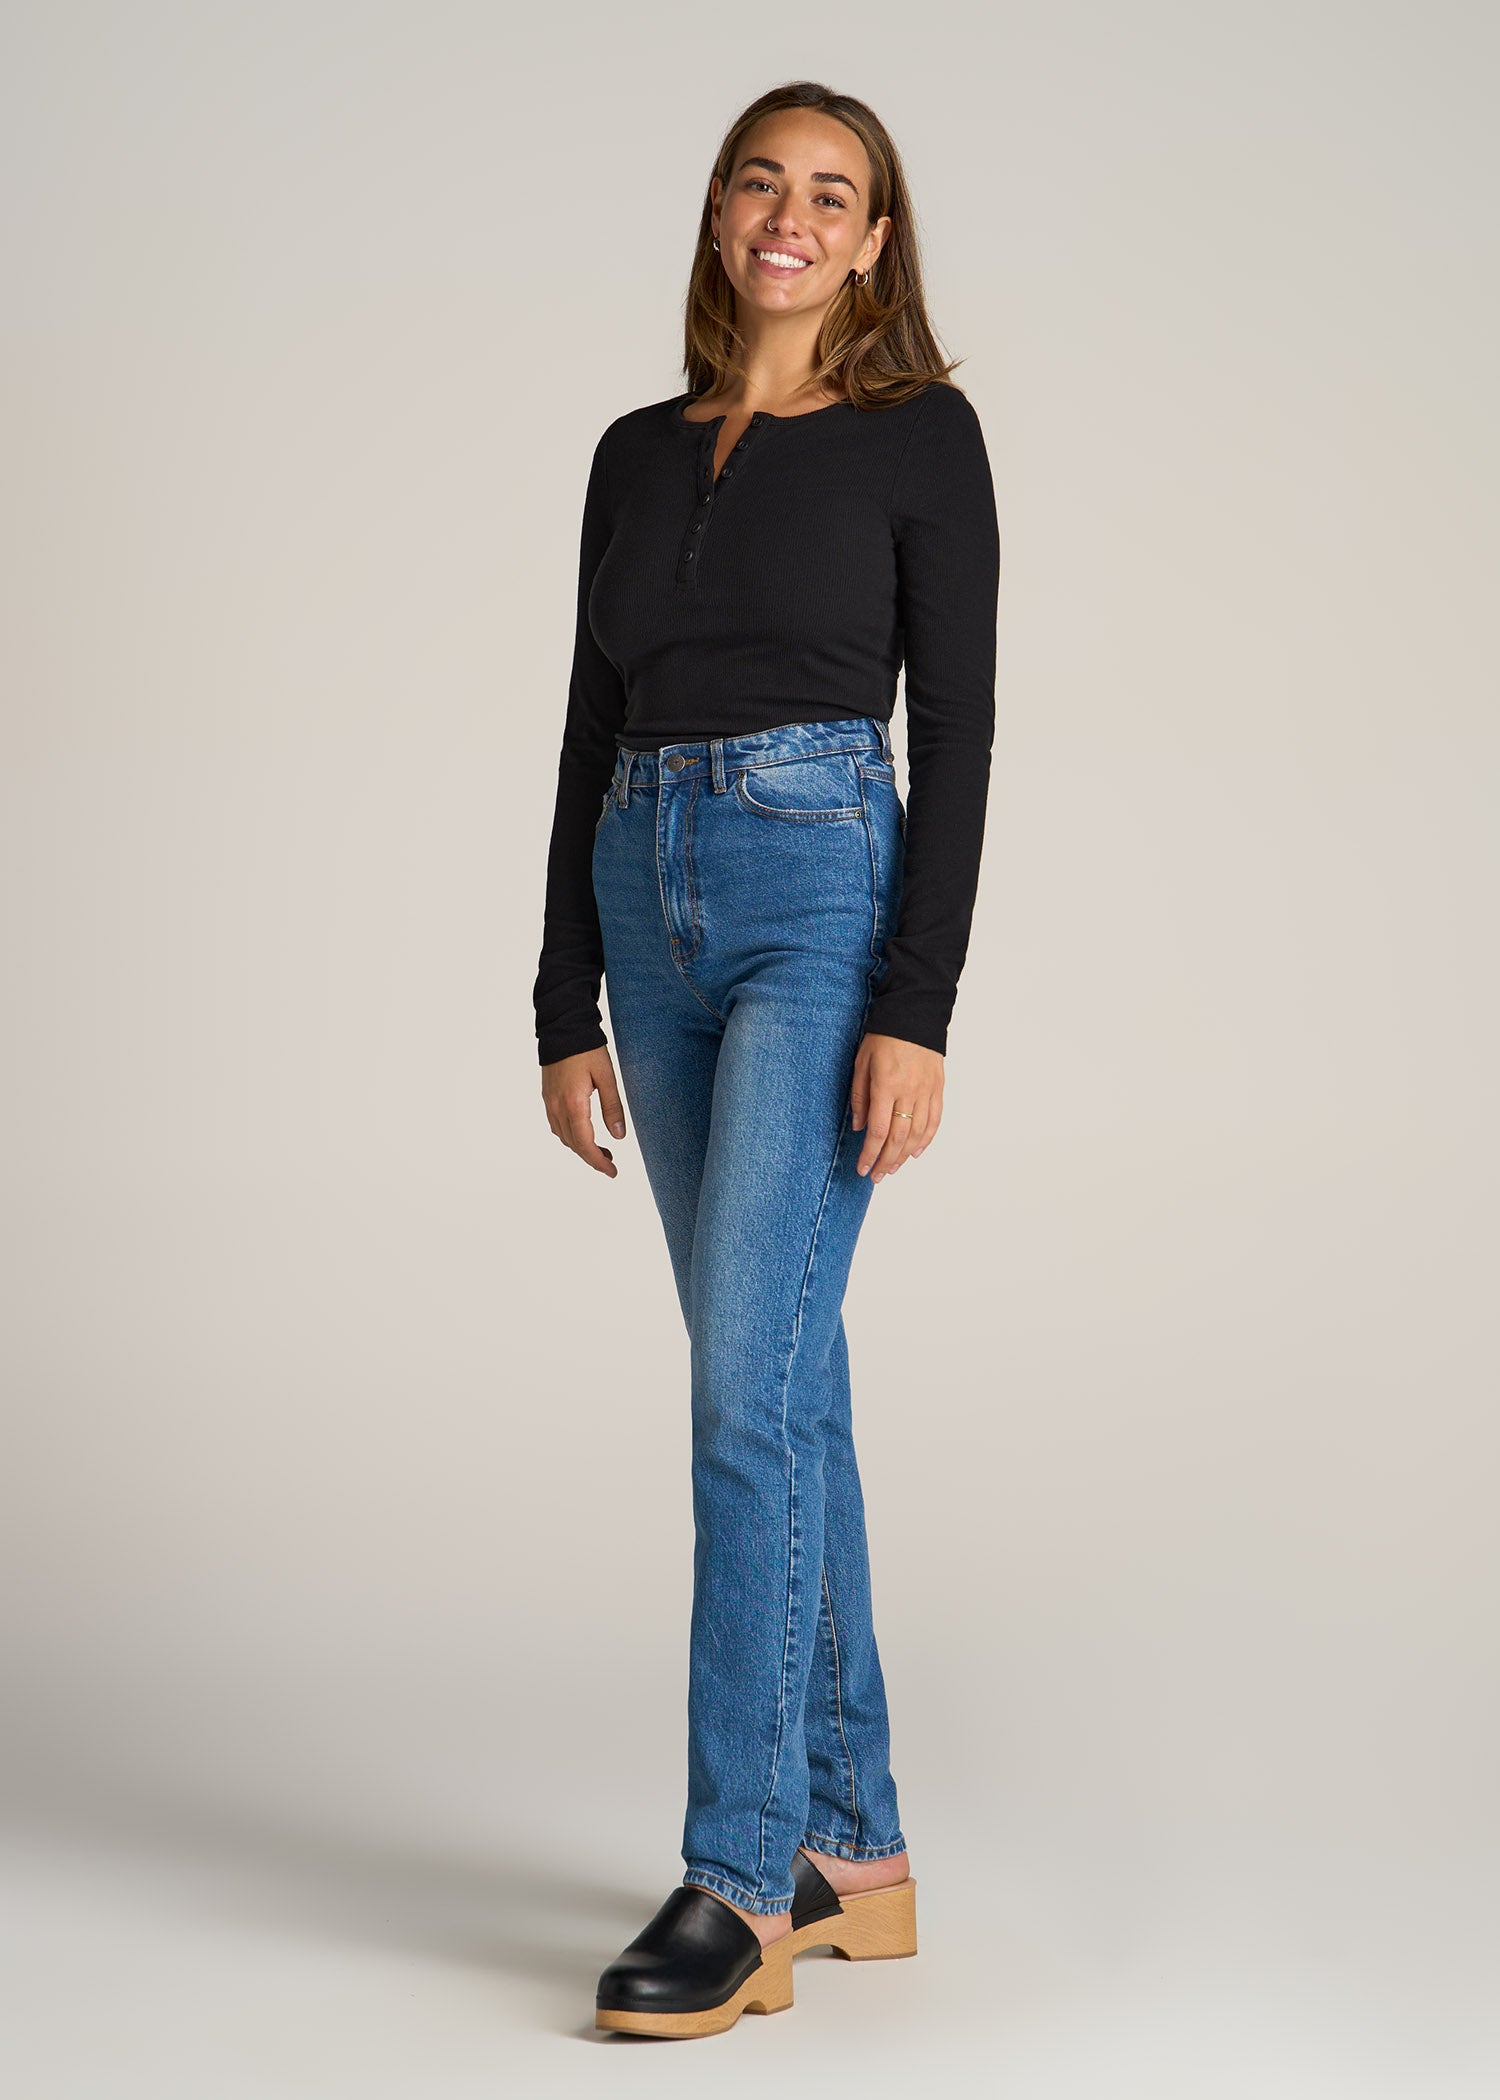 Ribbed Henley - Women's Tall Long Sleeve Shirts